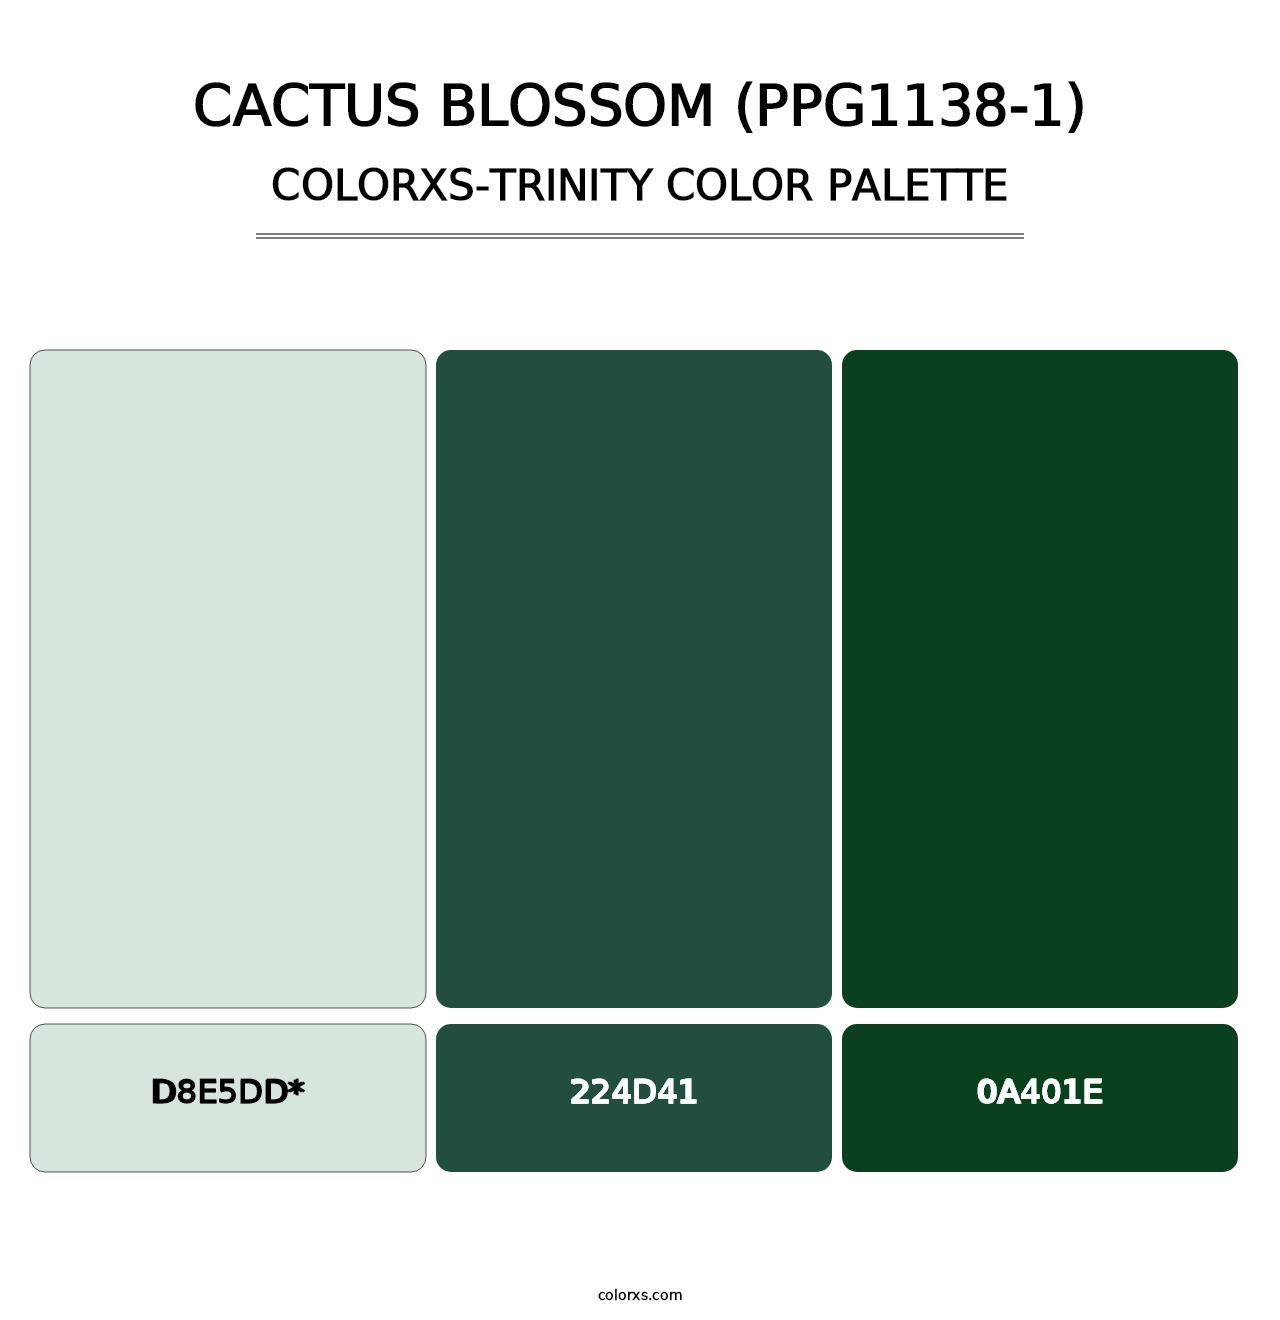 Cactus Blossom (PPG1138-1) - Colorxs Trinity Palette